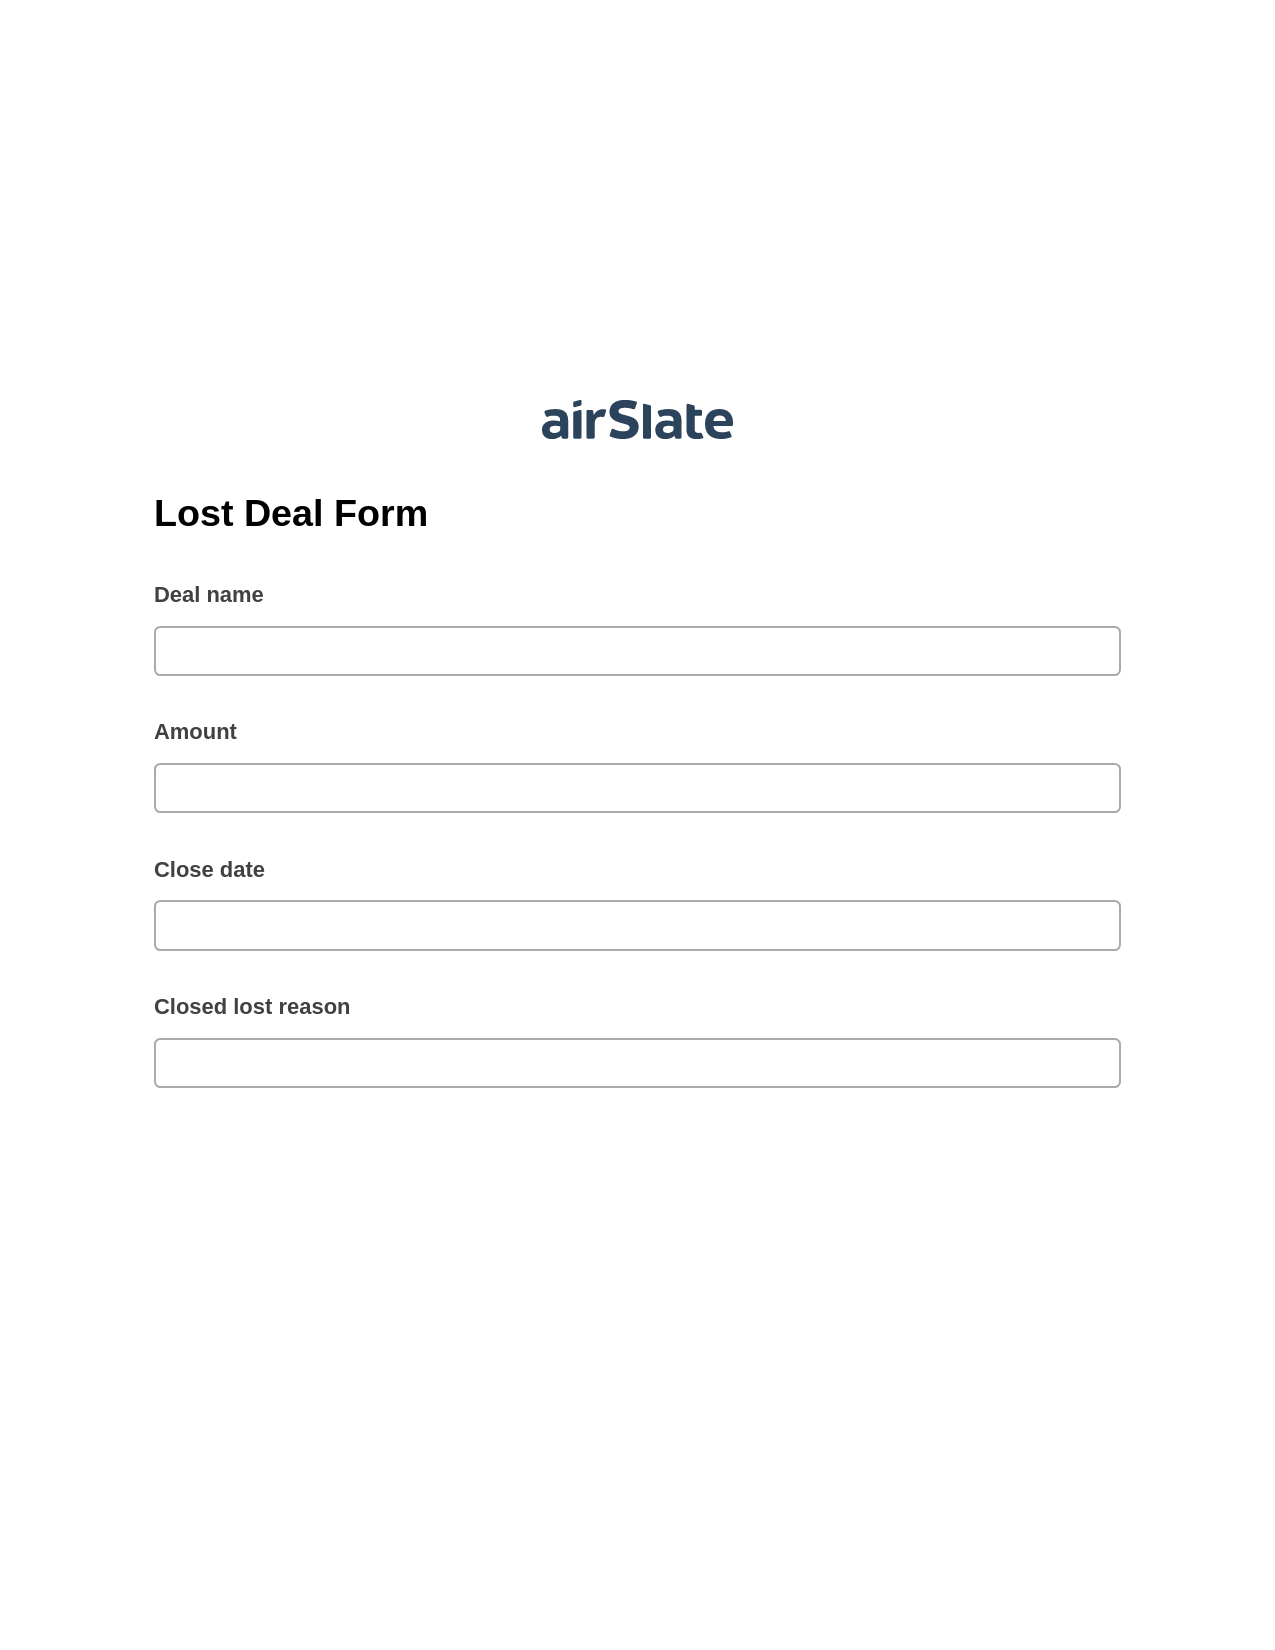 Lost Deal Form Pre-fill from Salesforce Records Bot, Reminder Bot, Slack Notification Postfinish Bot